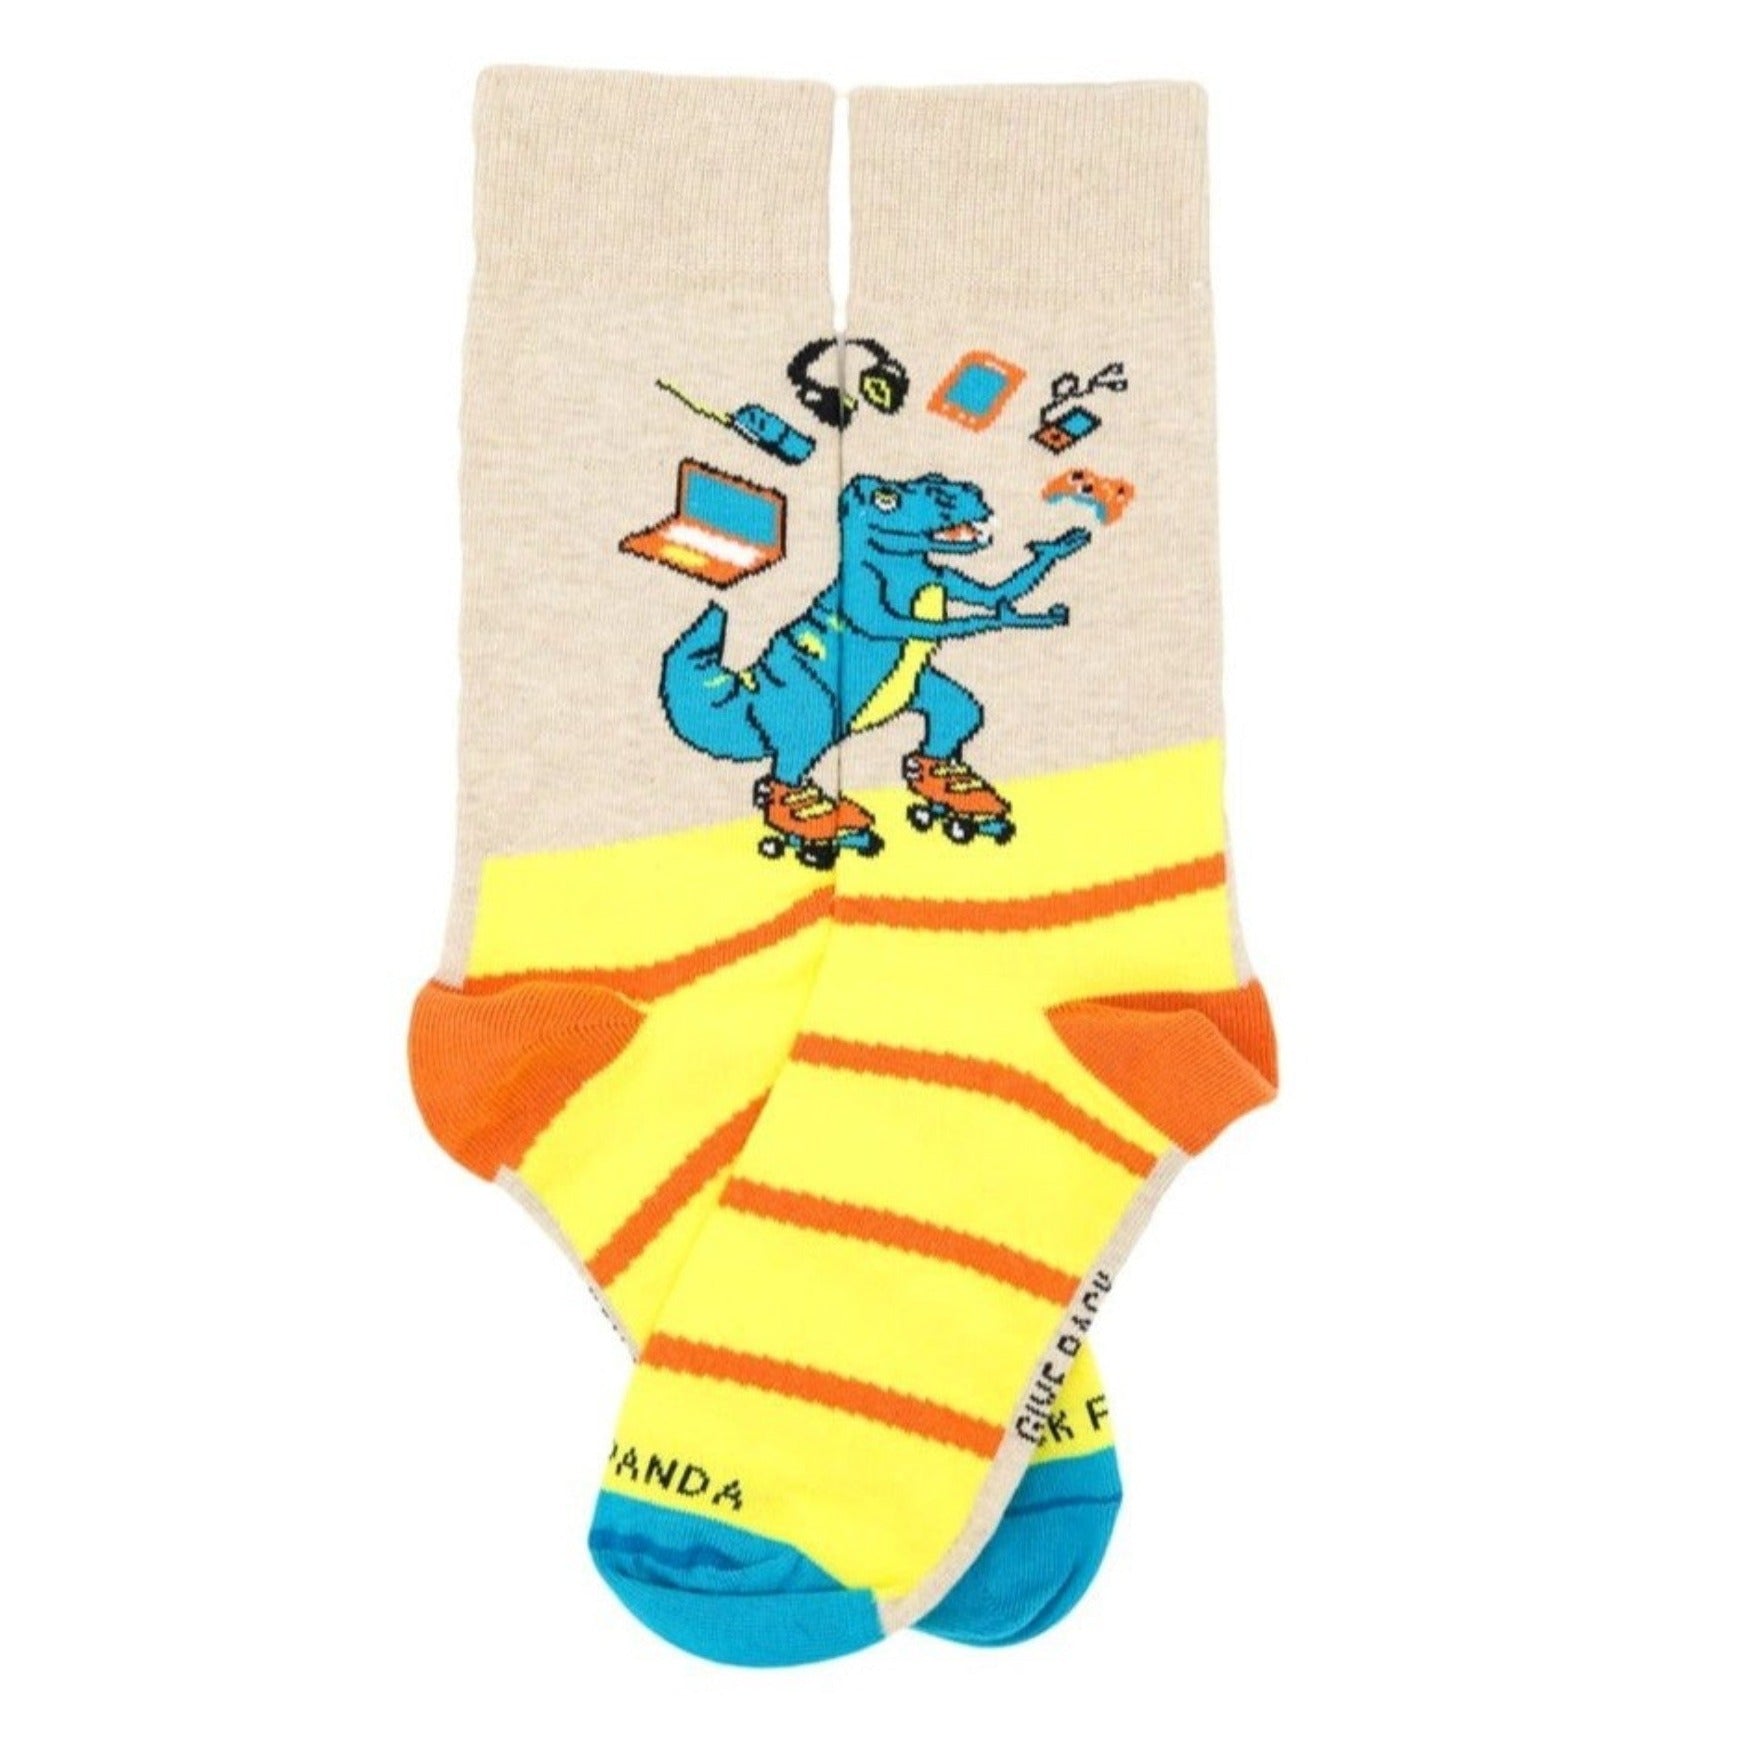 Juggling Dinosaur Socks (Back to School) from the Sock Panda (Adult Small)